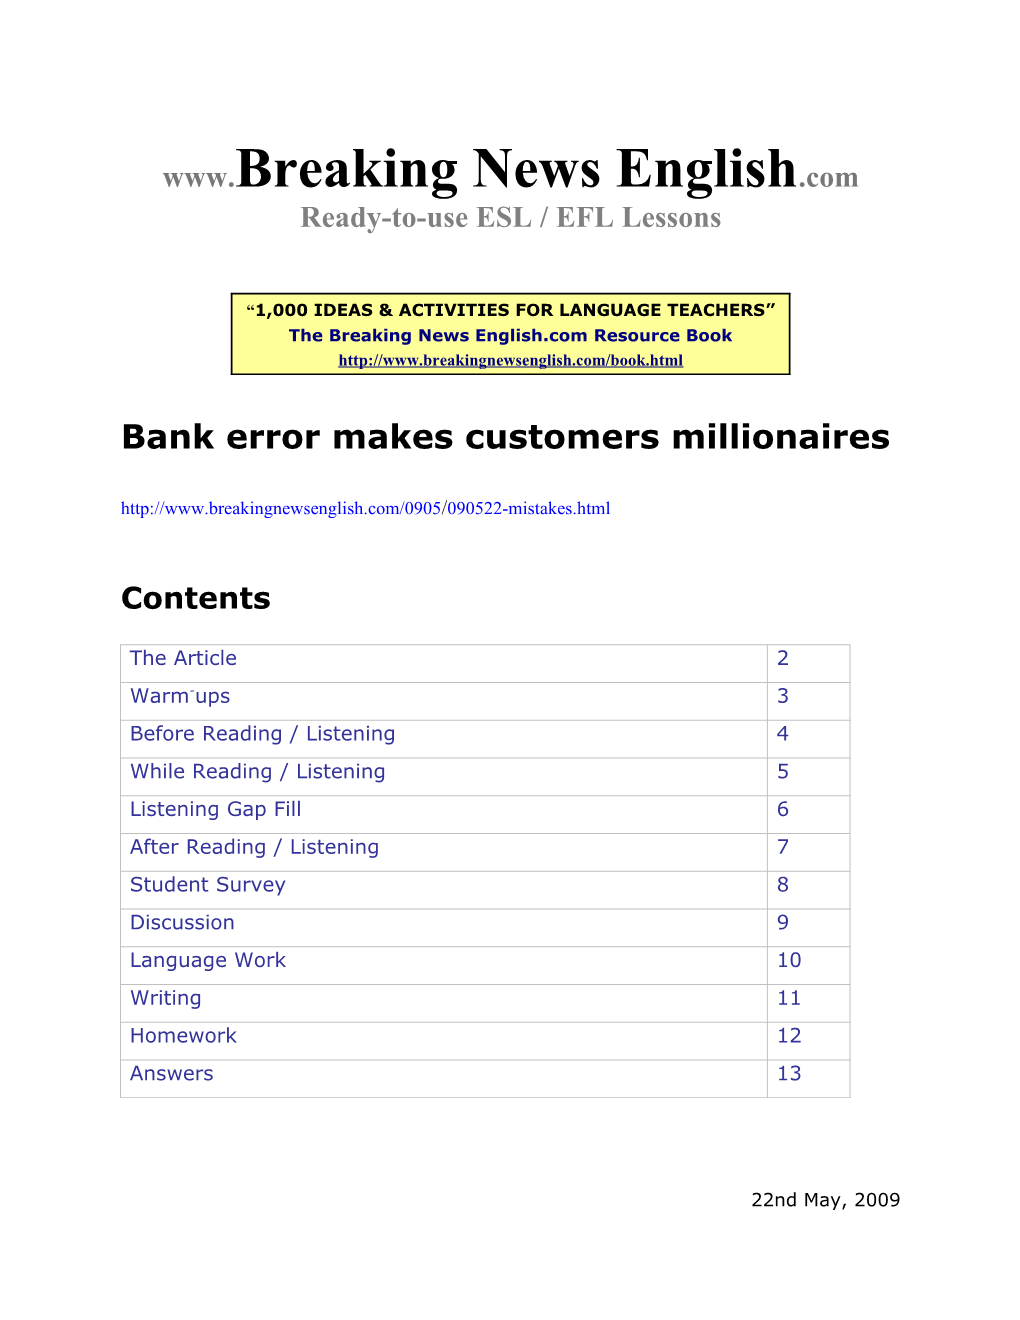 ESL Lesson: Bank Error Makes Customers Millionaires